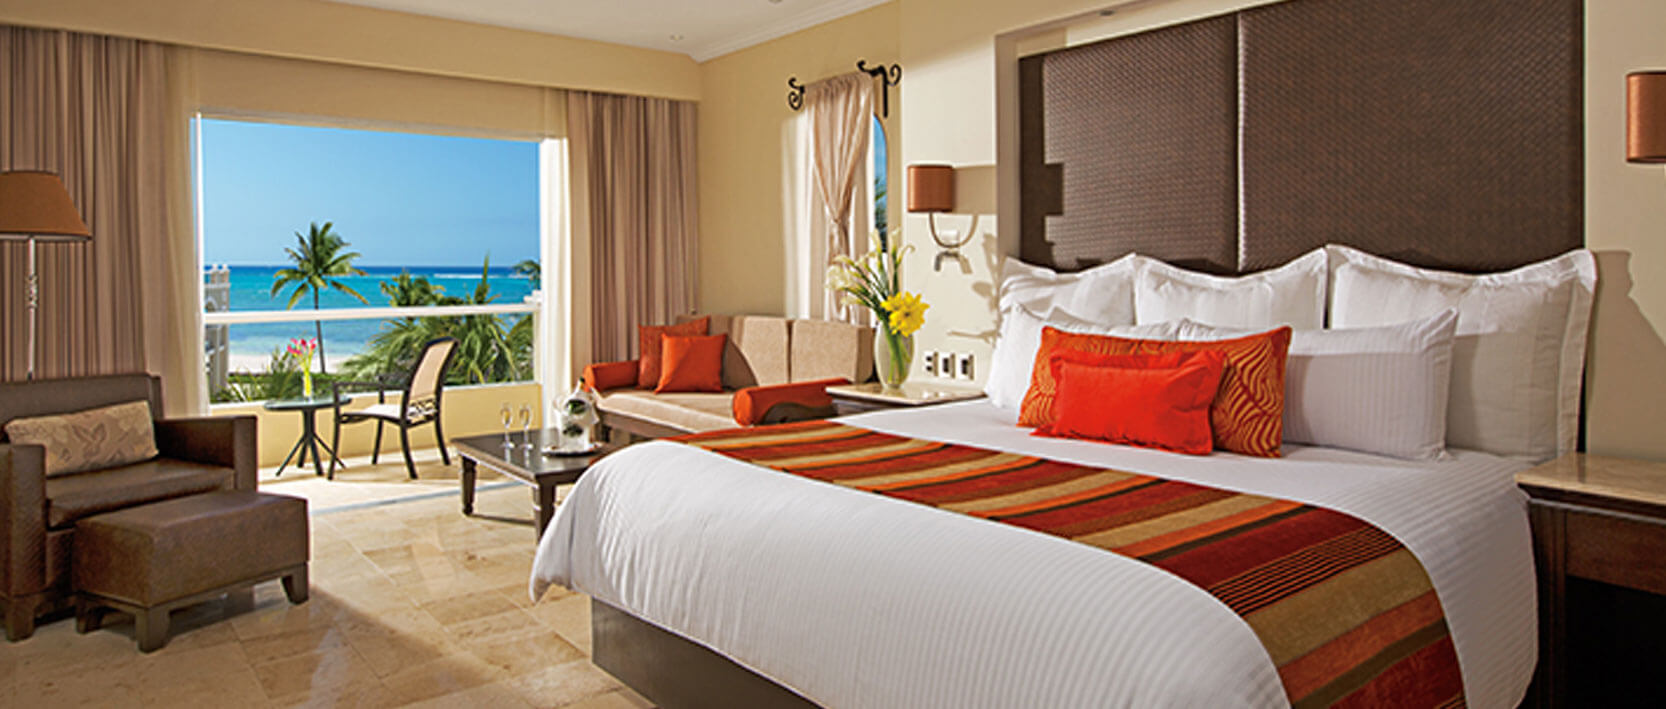 Dreams Tulum Resort Accommodations - Preferred Club Junior Suite Ocean Front